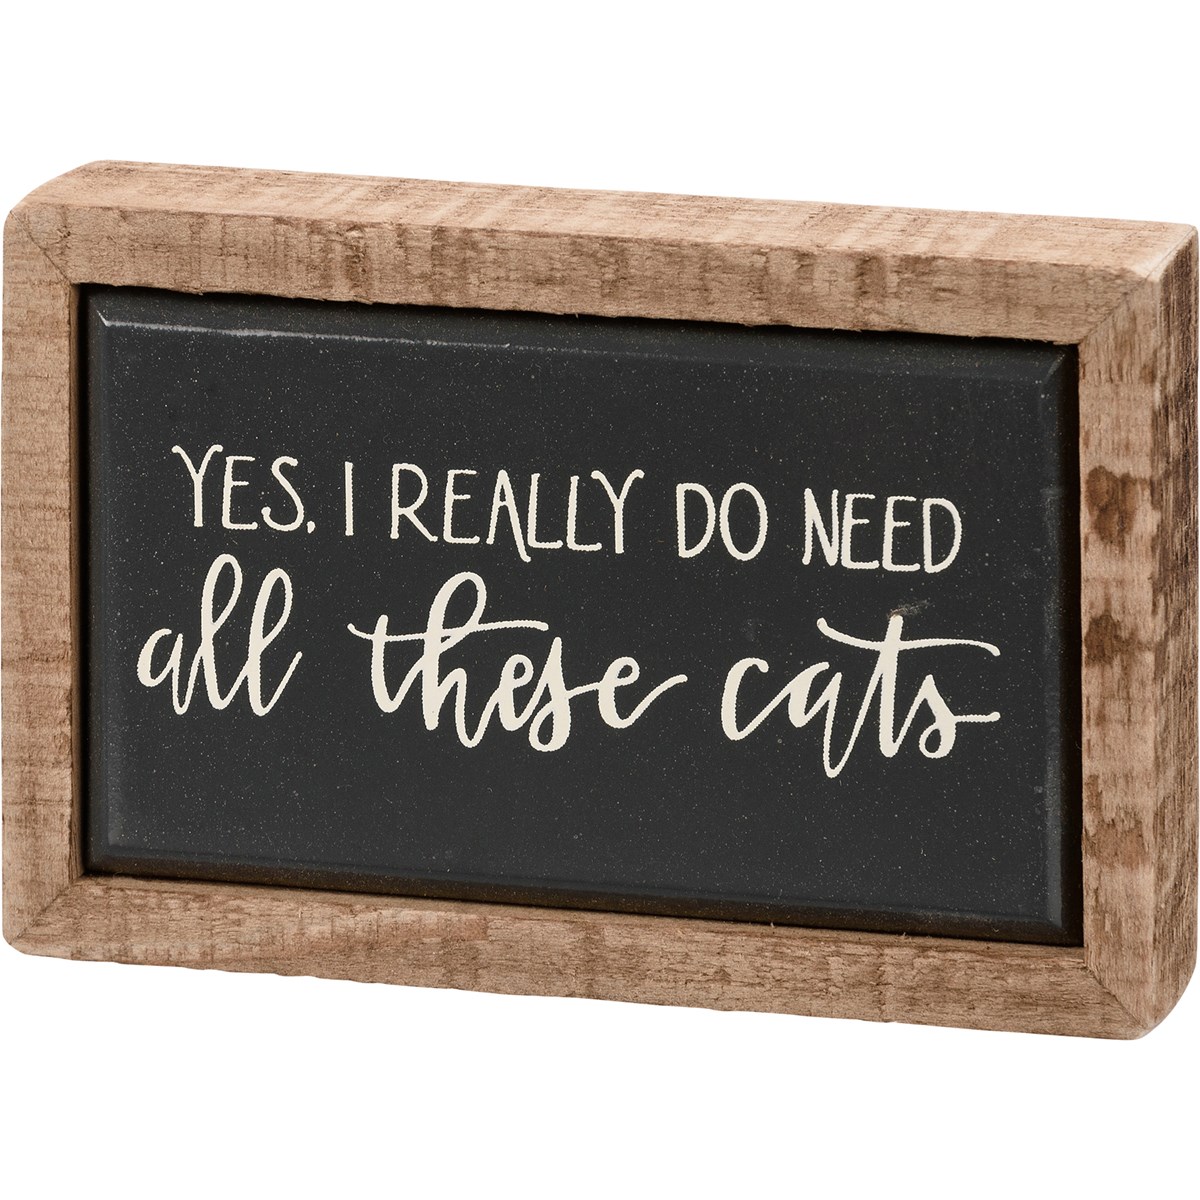 I Really Do Need All These Cats Box Sign Mini - Wood